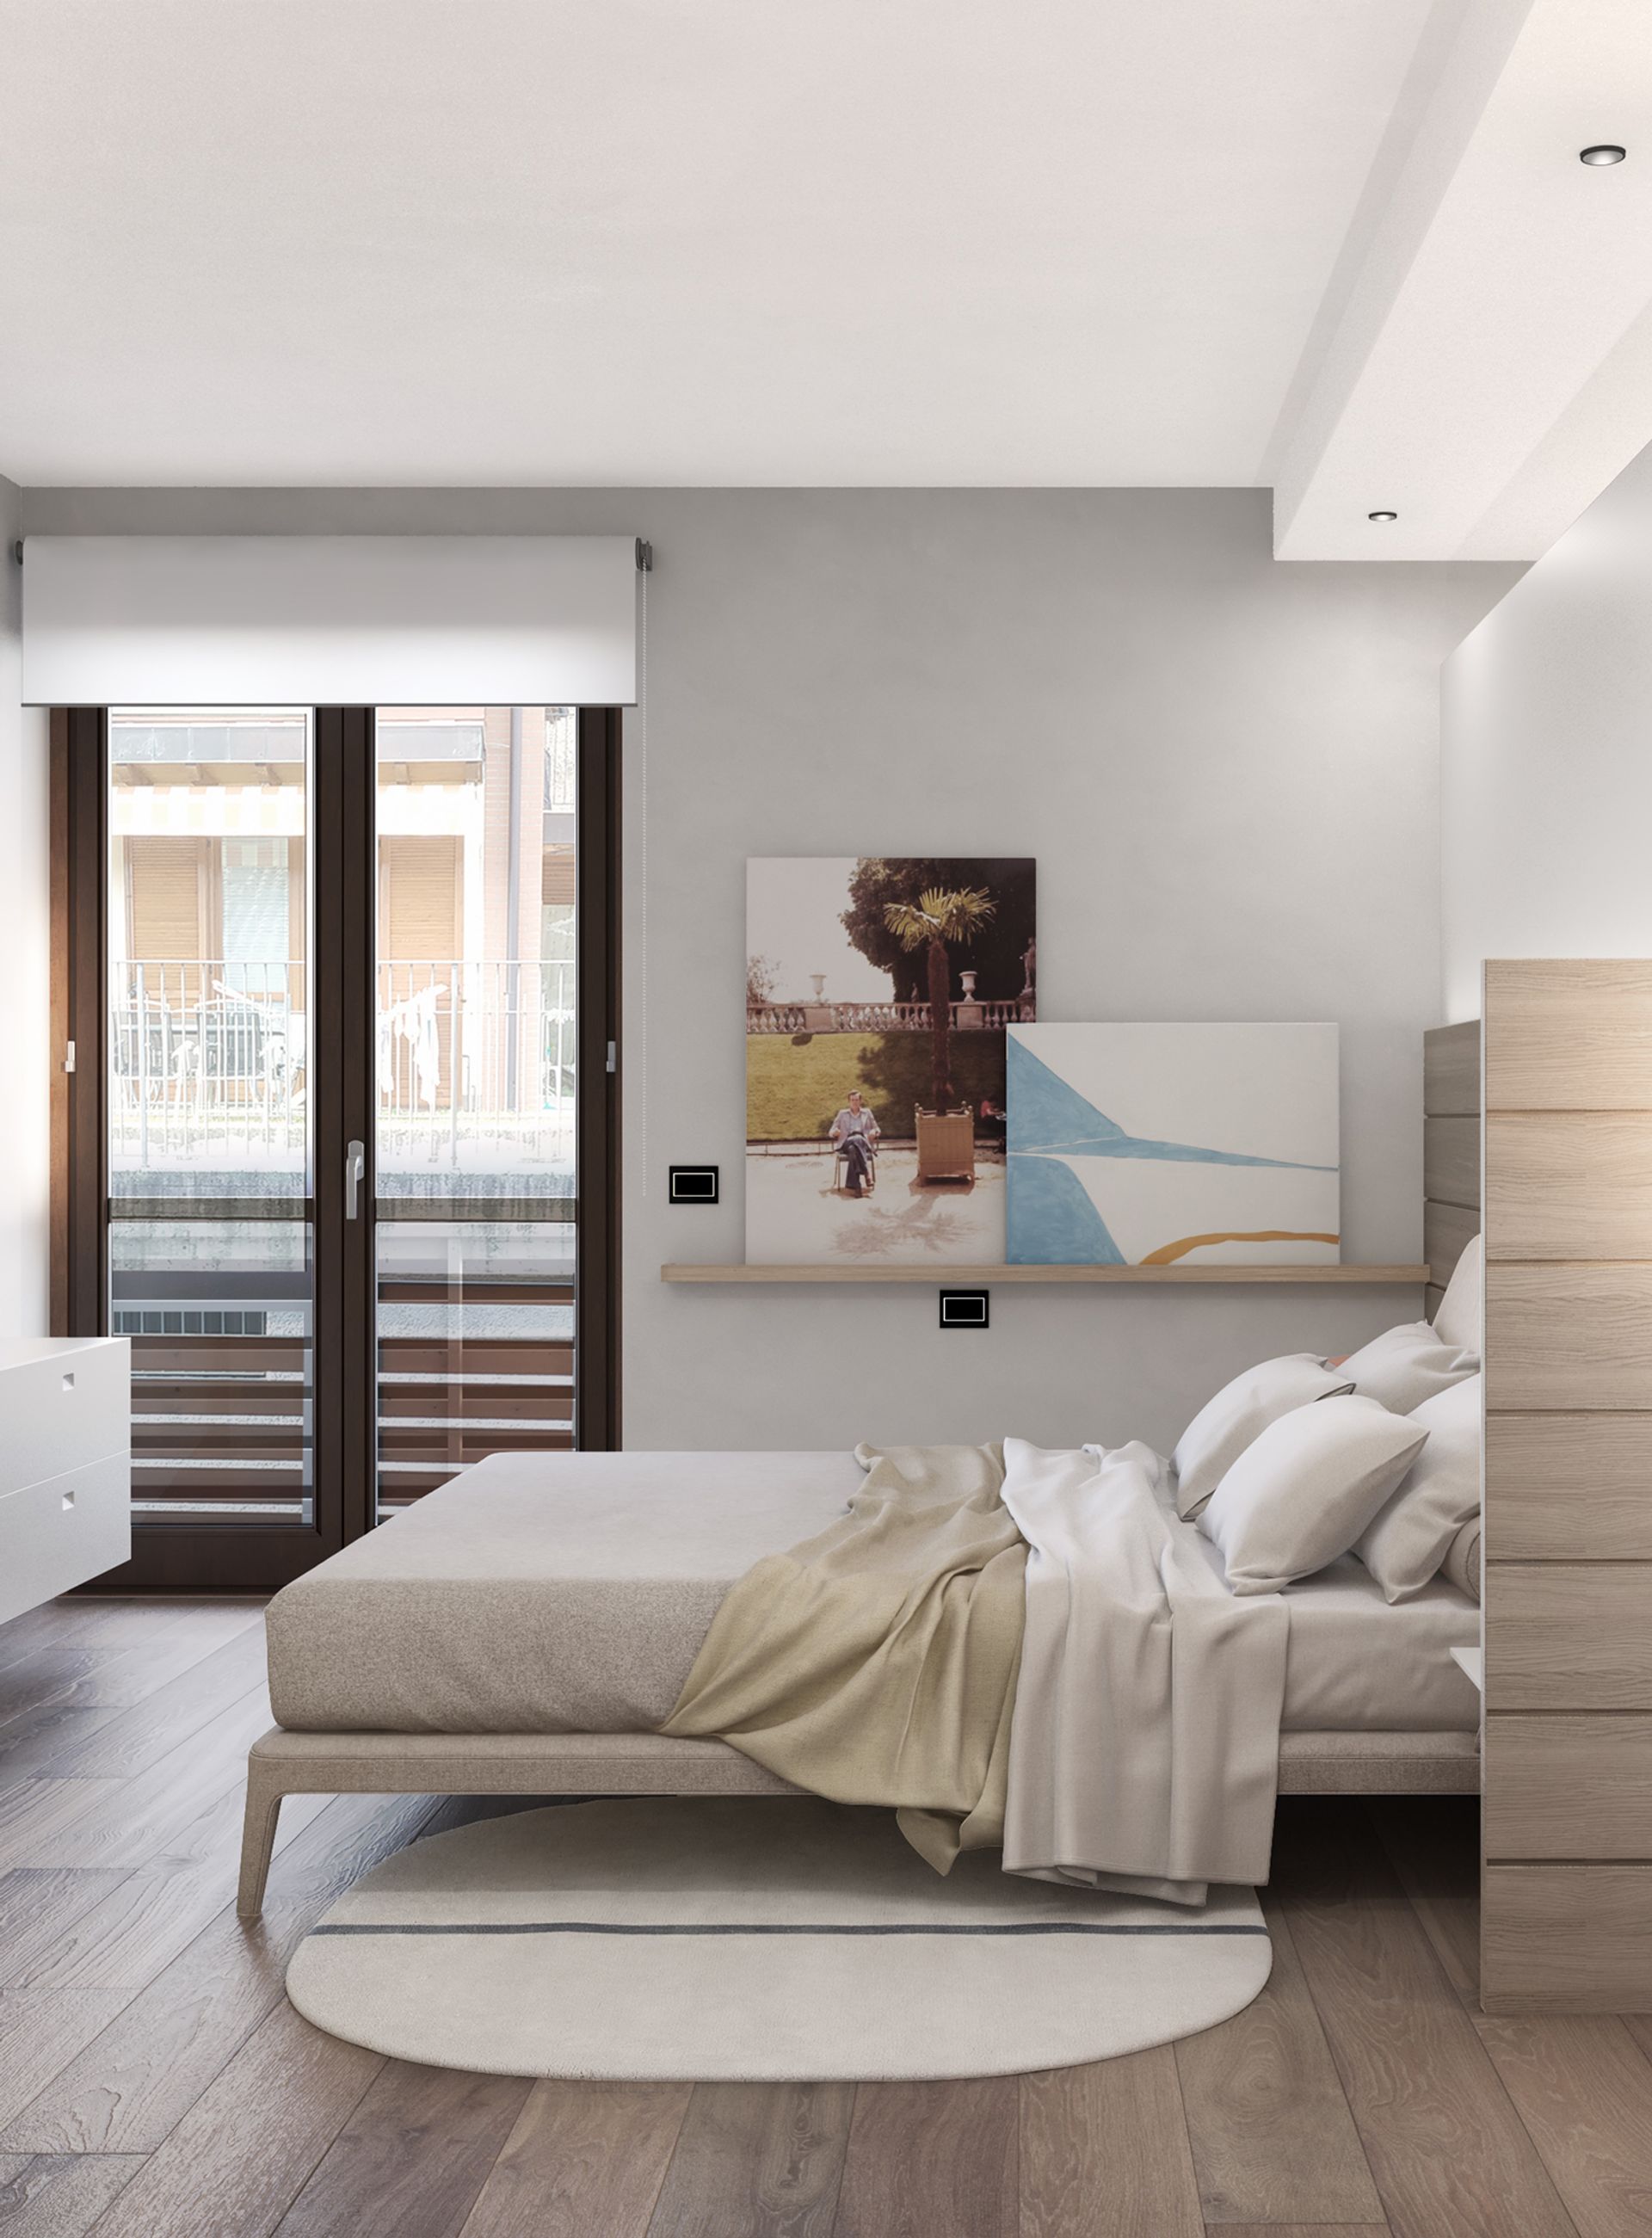 Interior design project, apartment with a view renovation Seriana Valley, Bergamo, Milan, Lake Como, London, New York, Paris. Officina Magisafi architecture design - bedroom view rendering